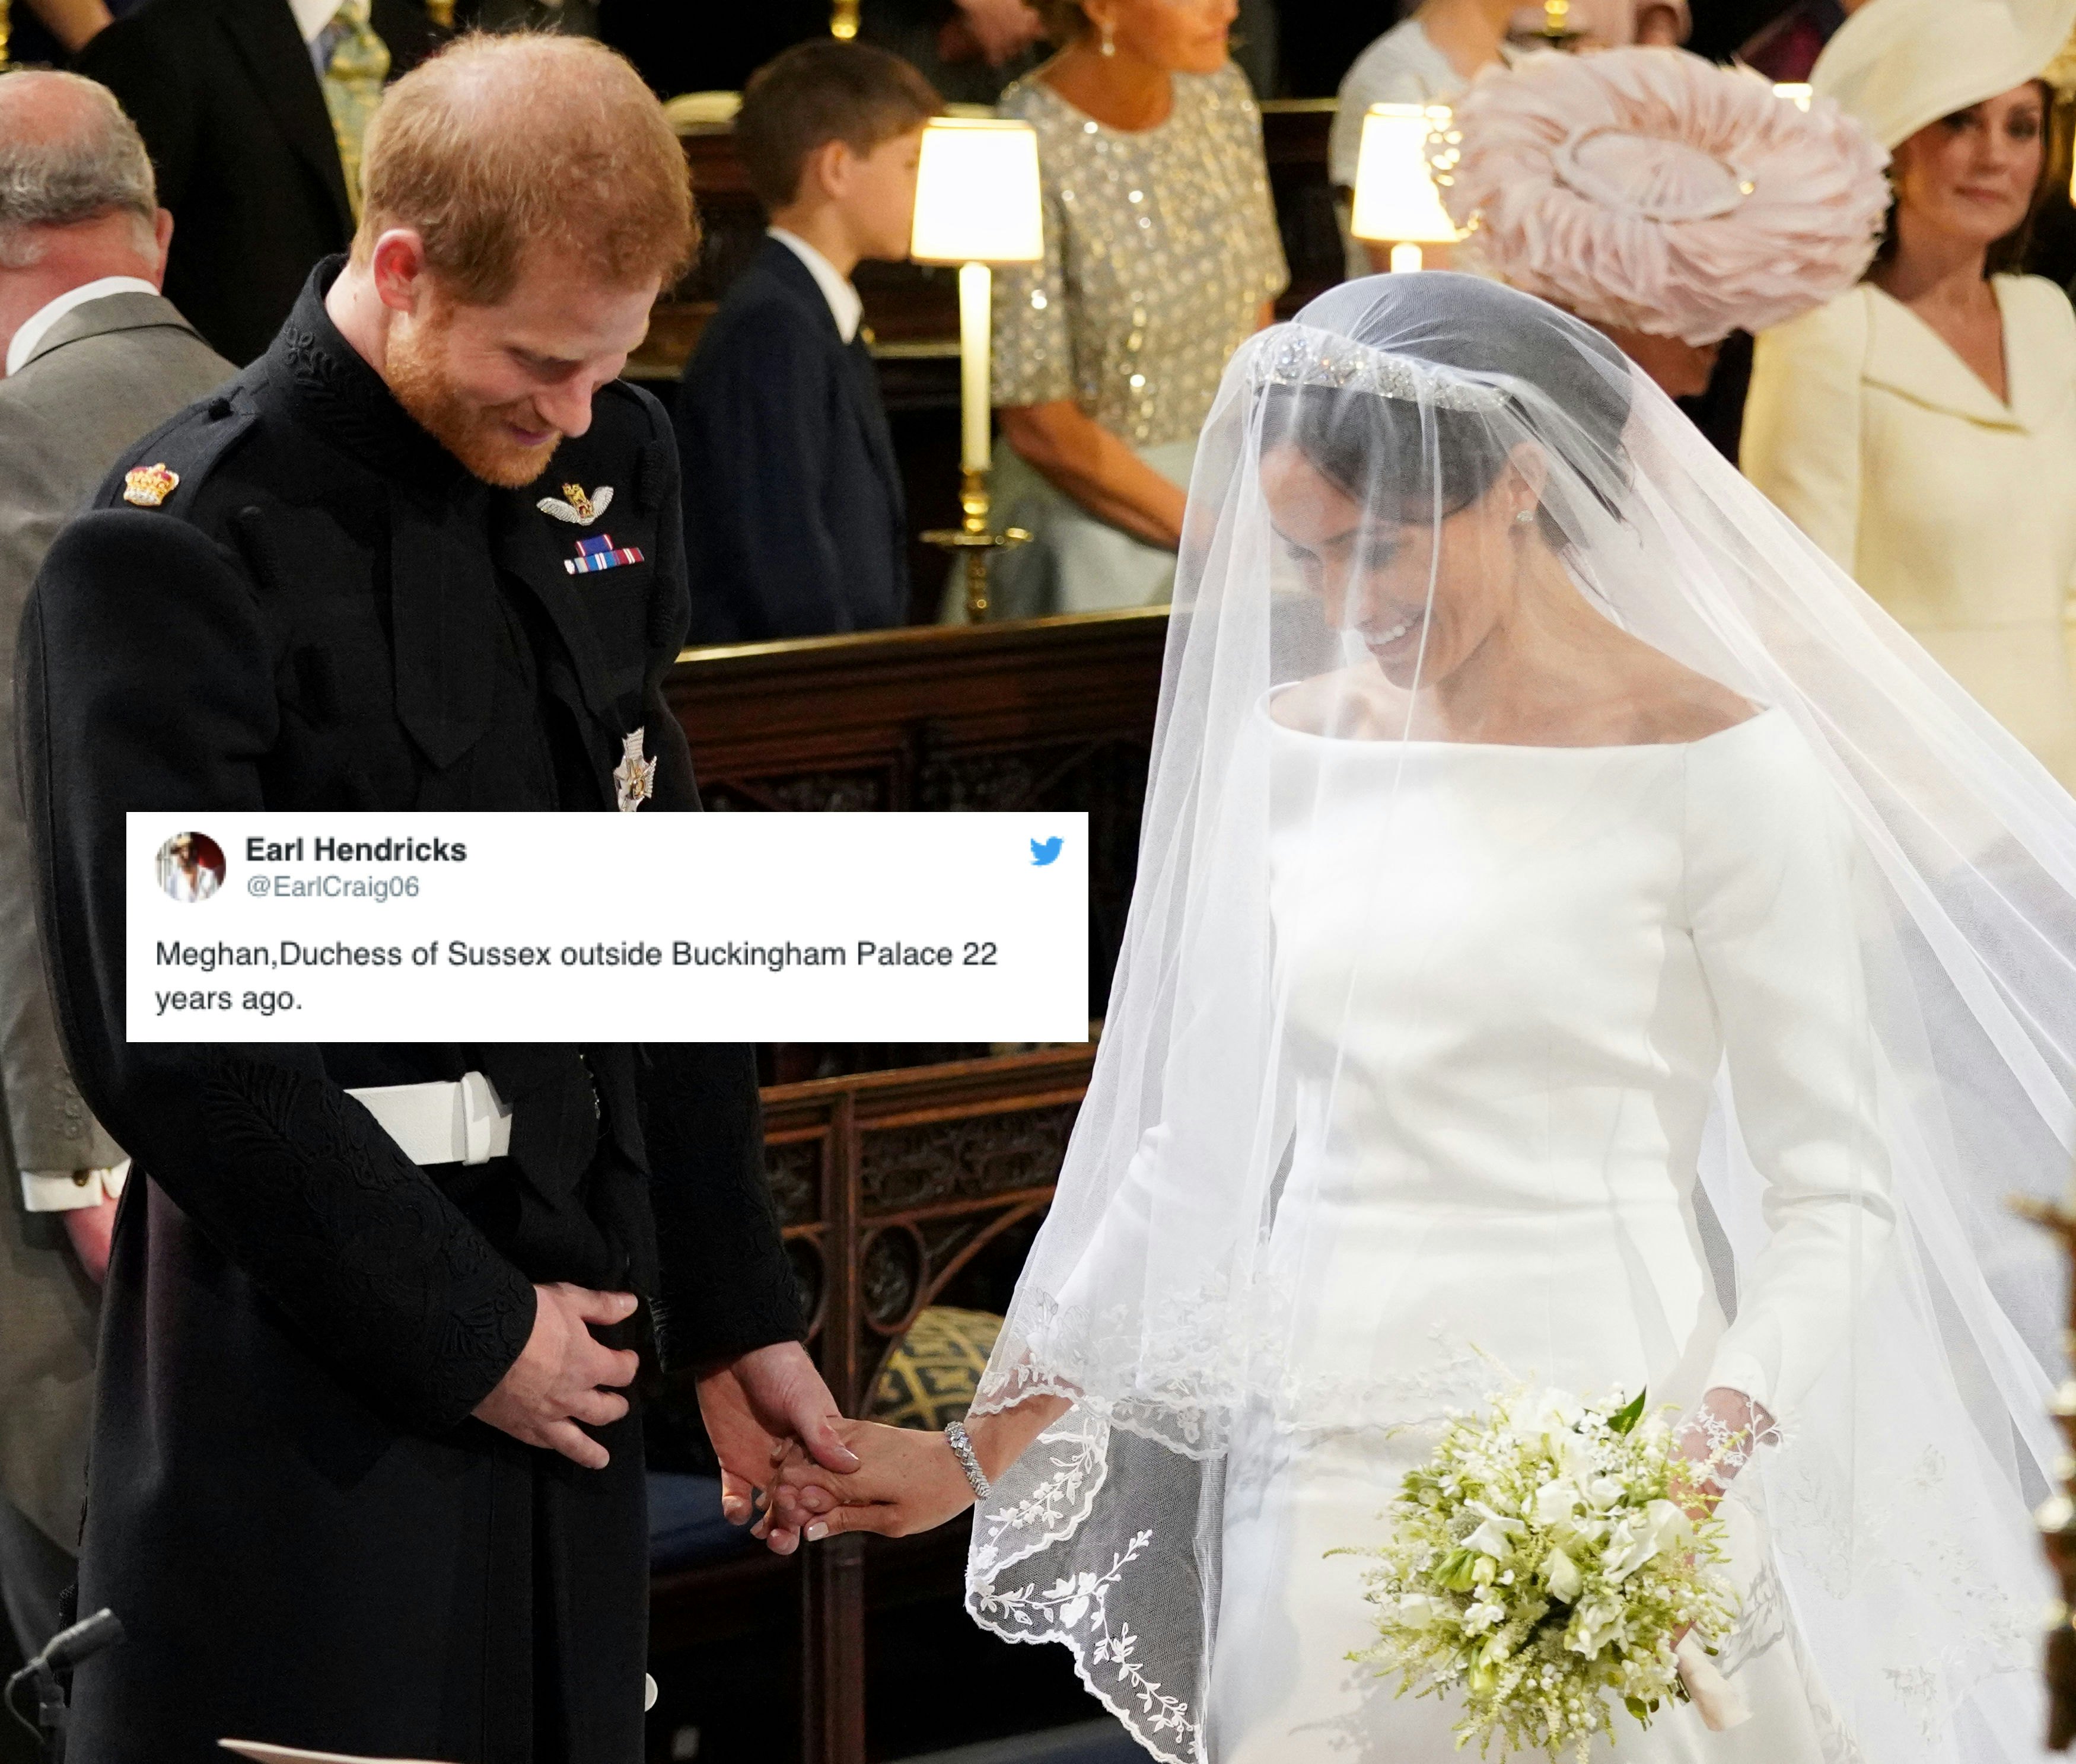 the royal wedding twitter